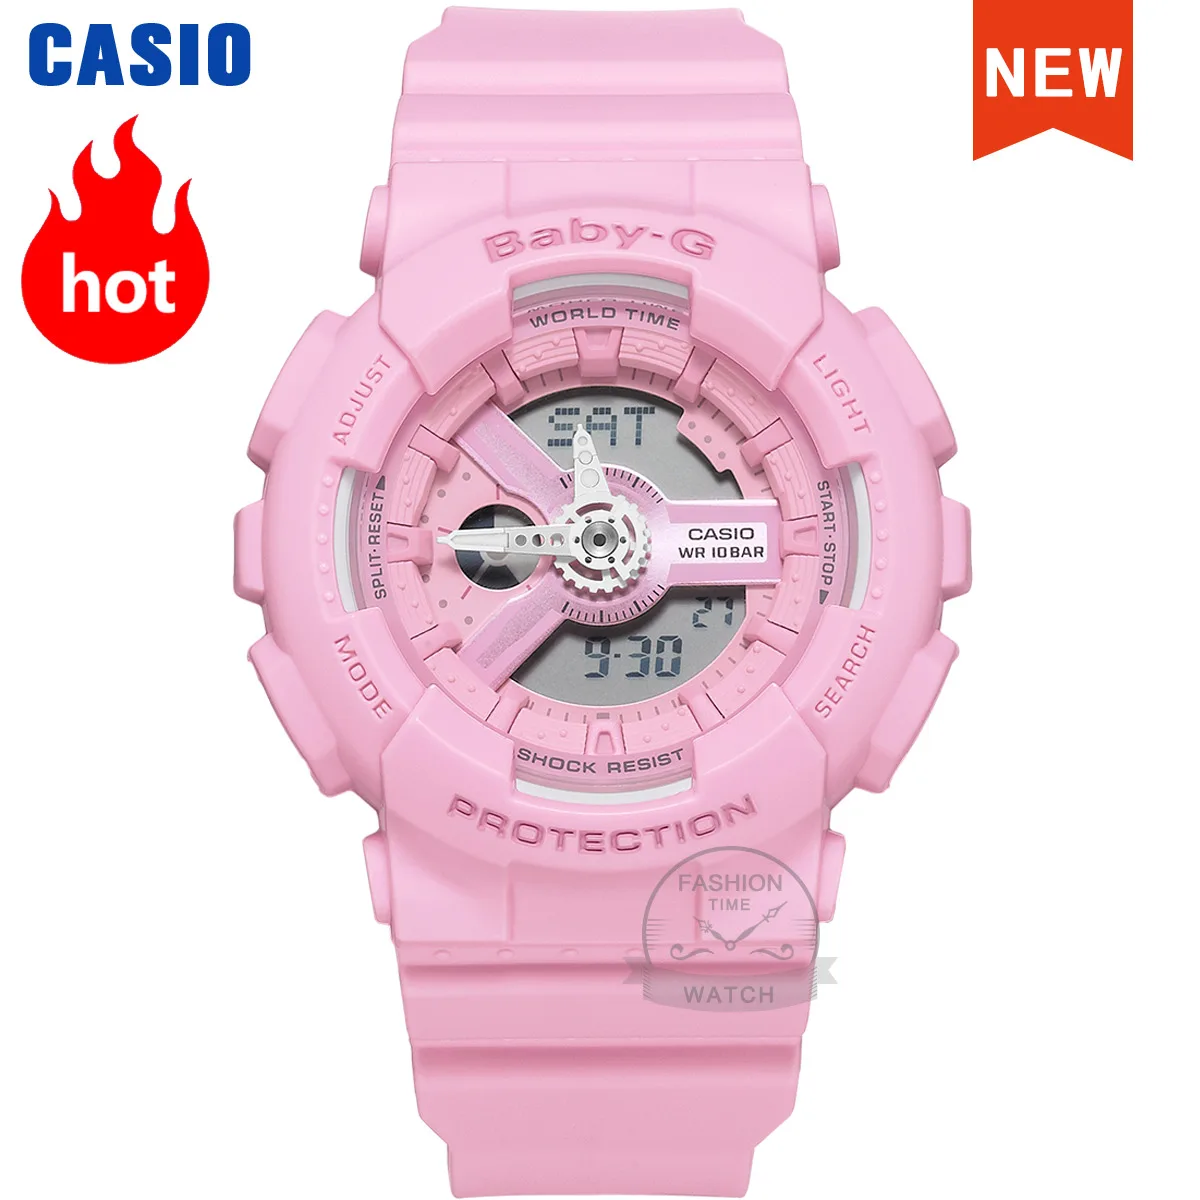 Enlarge Casio watch men g shock top luxury set military Chronograph LED digital watch sport quartz men watch часы мужские BA-110-4A1